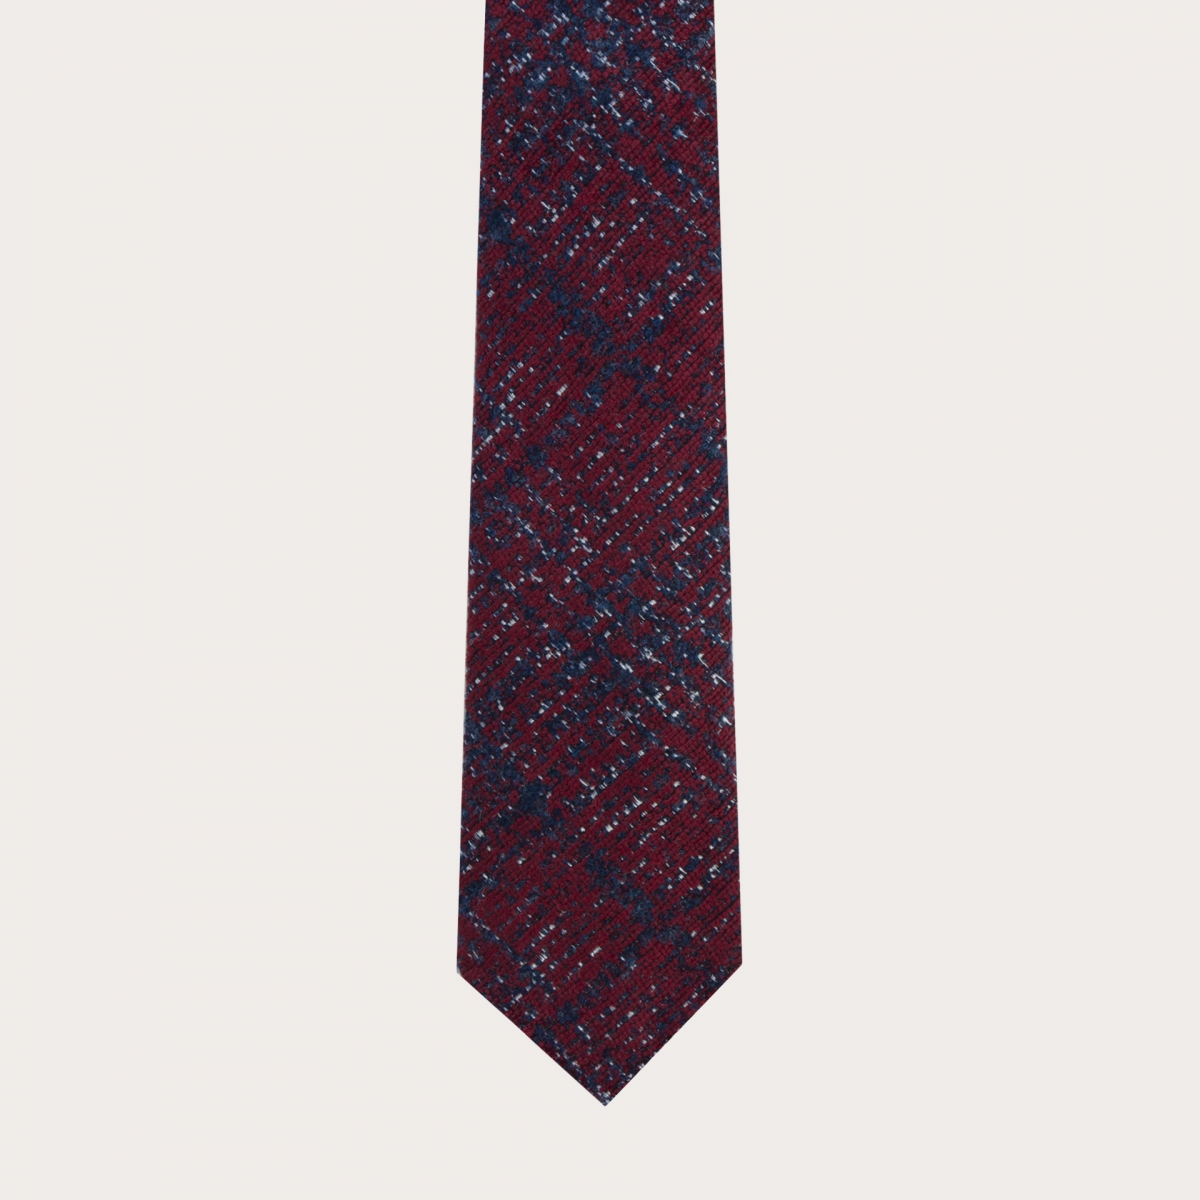 Cravatta sfoderata in lana e seta tartan grigia chiara